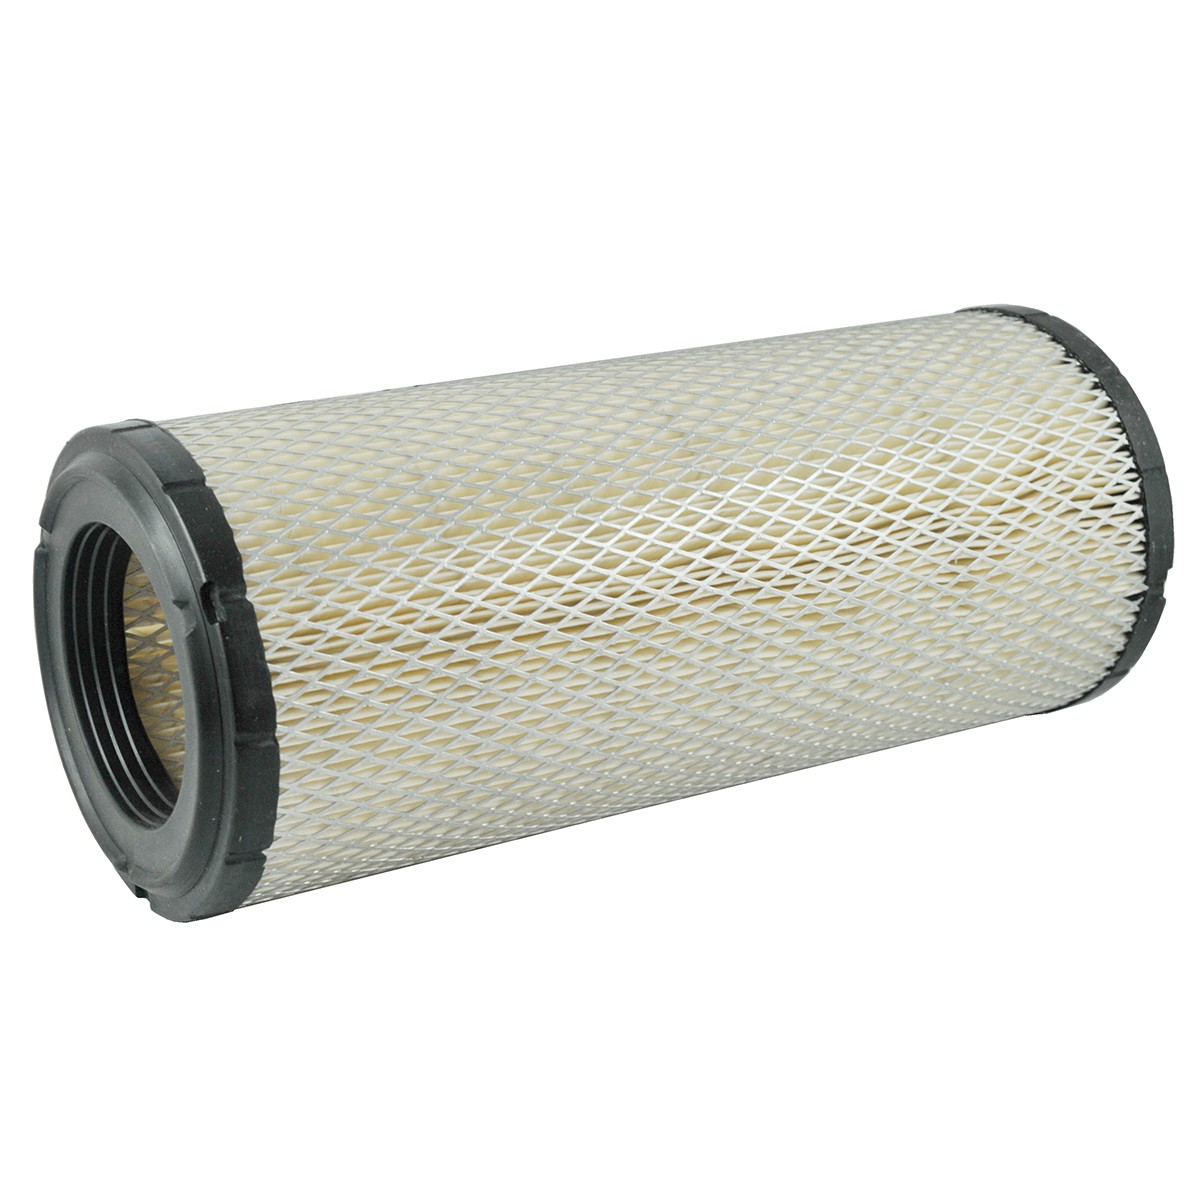 Kubota air filter M / 321 x 137 mm / 59800-26110 / 6-01-102-07 / SA 16683